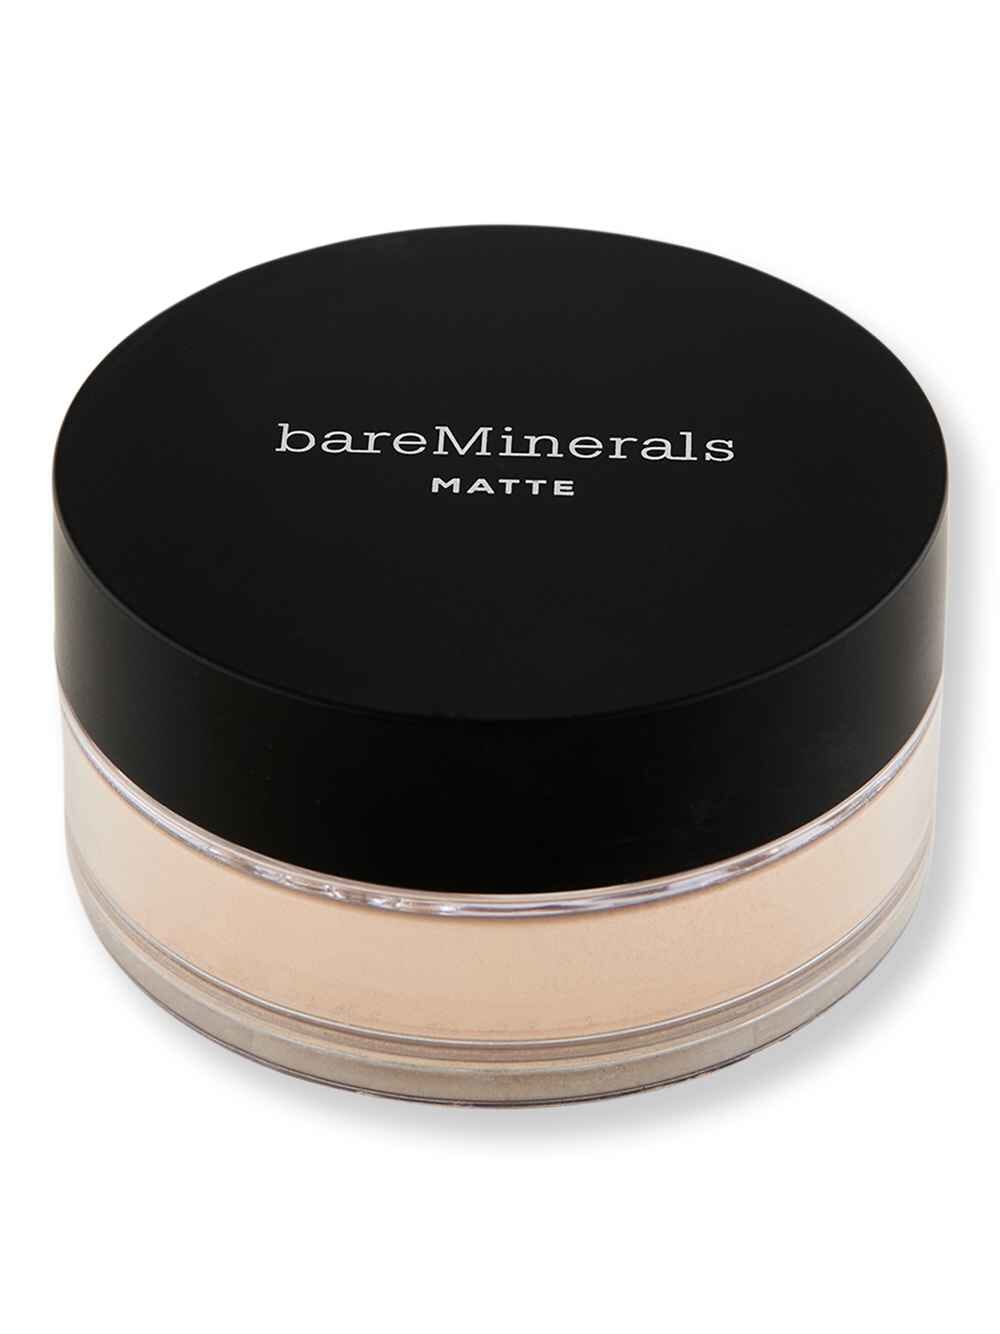 Bareminerals Bareminerals Matte Loose Powder Foundation SPF 15 Golden Nude 16 0.21 oz6 g Tinted Moisturizers & Foundations 